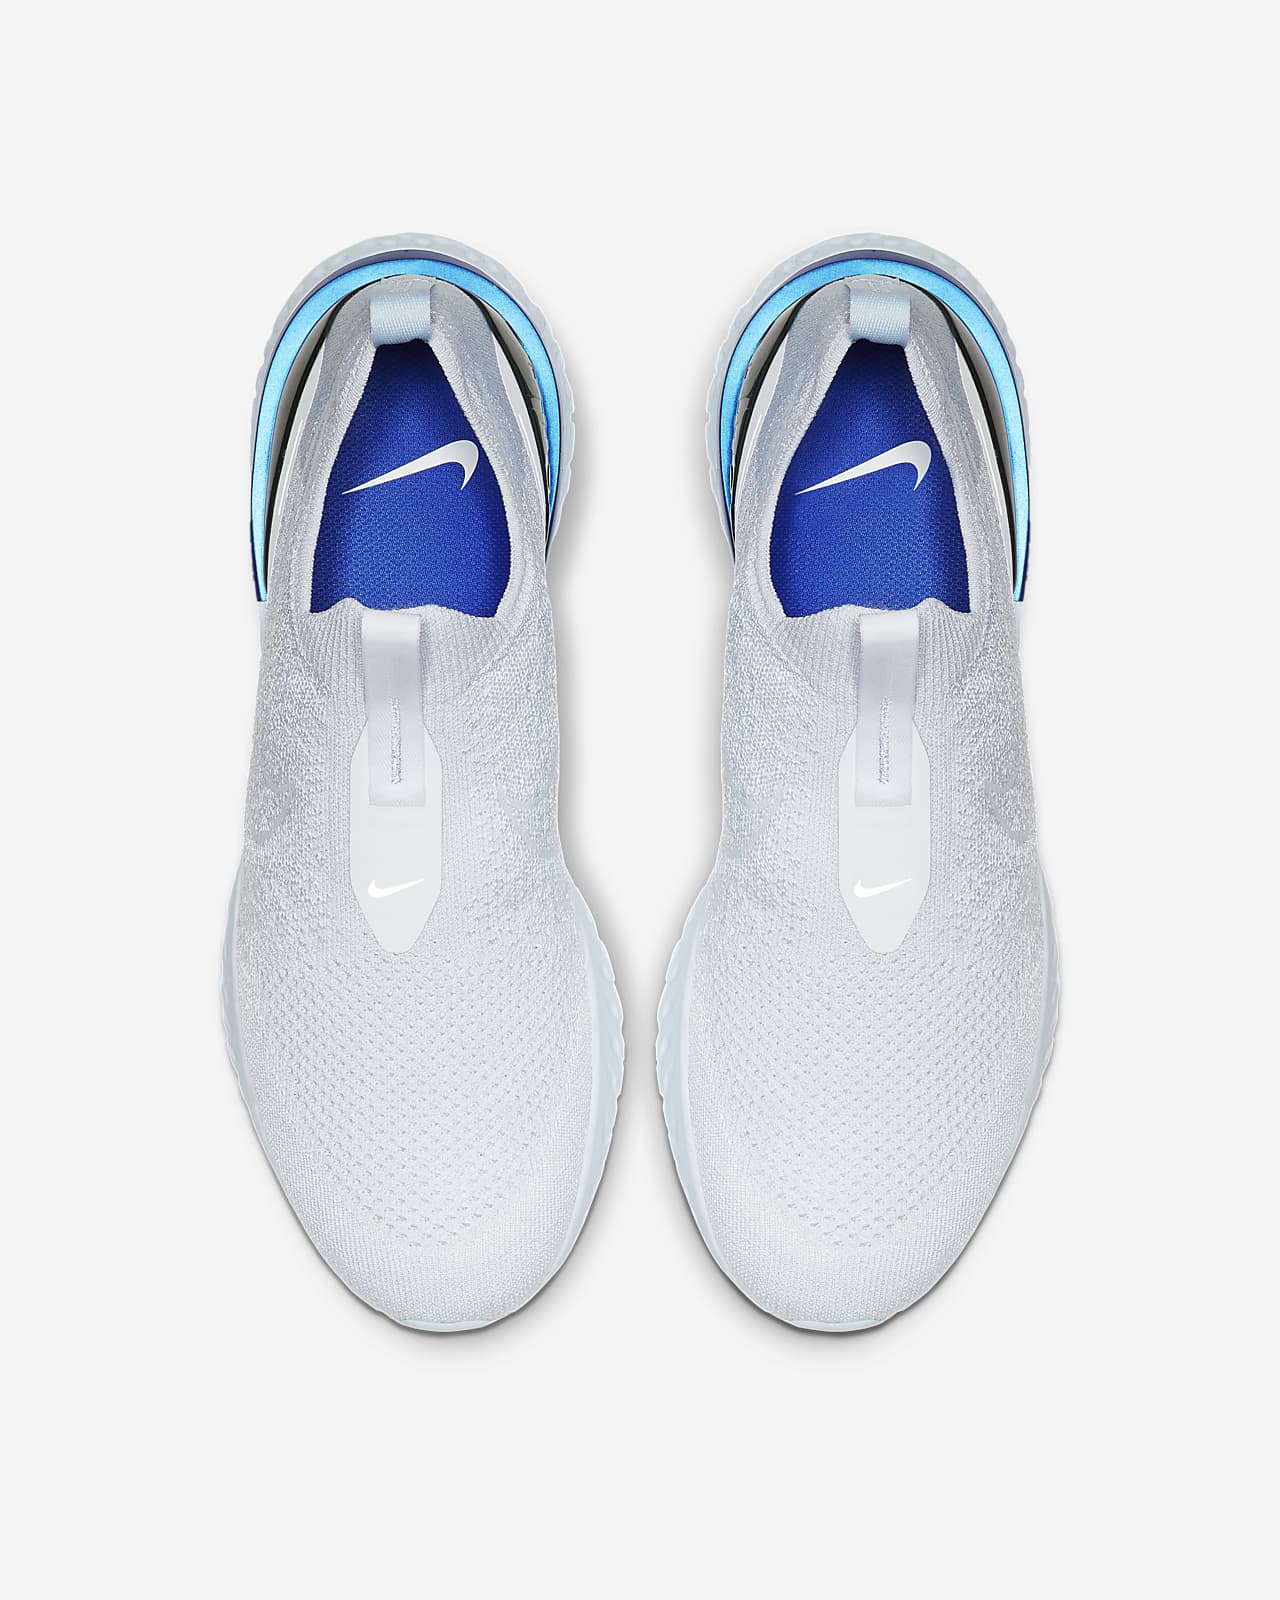 Nike Epic Phantom React Flyknit Men's Running Shoes